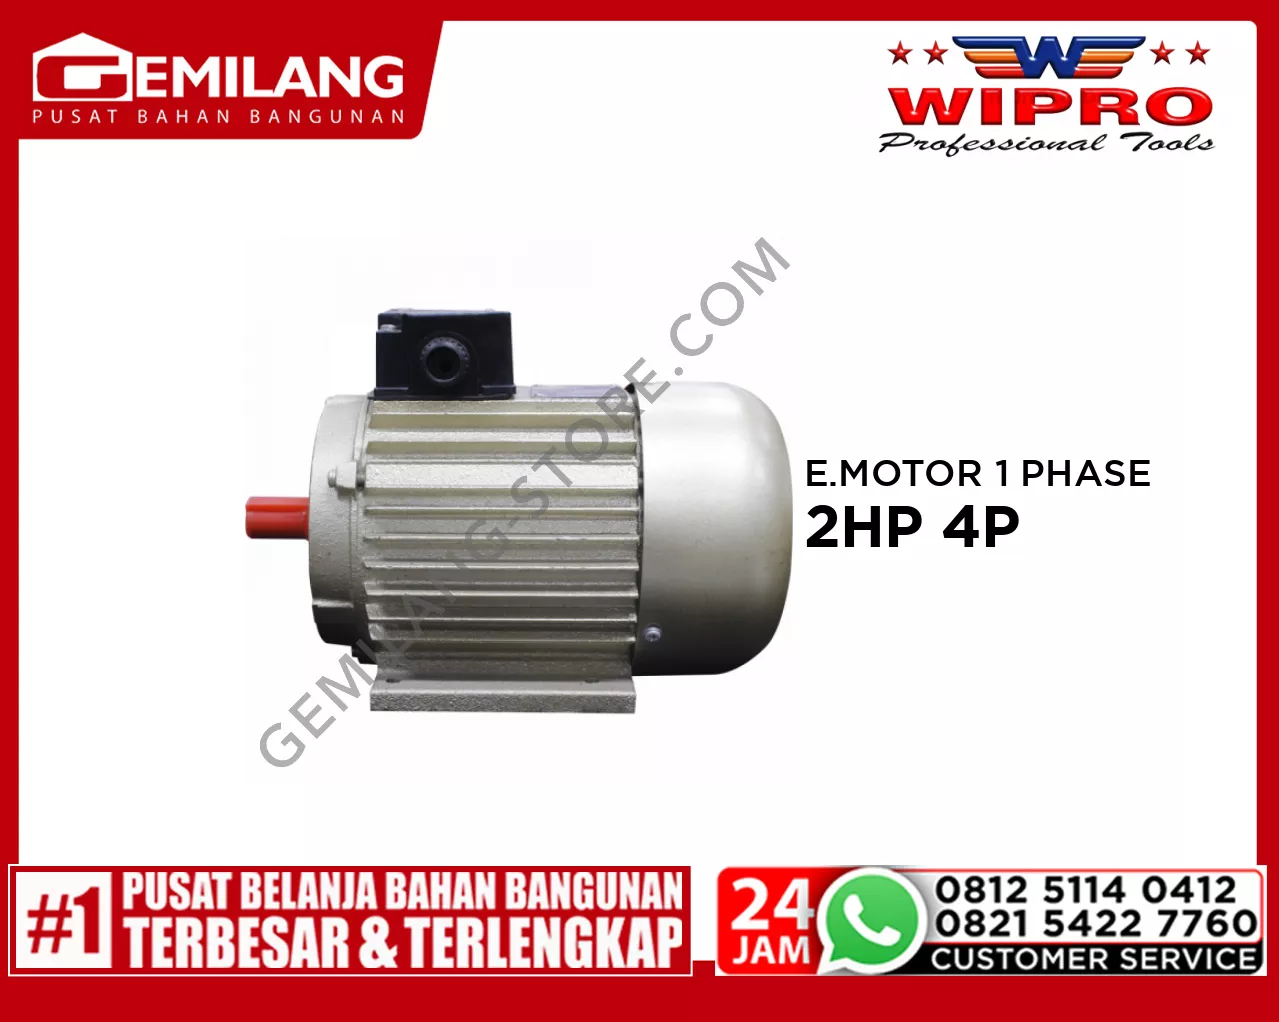 WIPRO ELECTROMOTOR 1 PHASE 2HP 4P (FOAM)